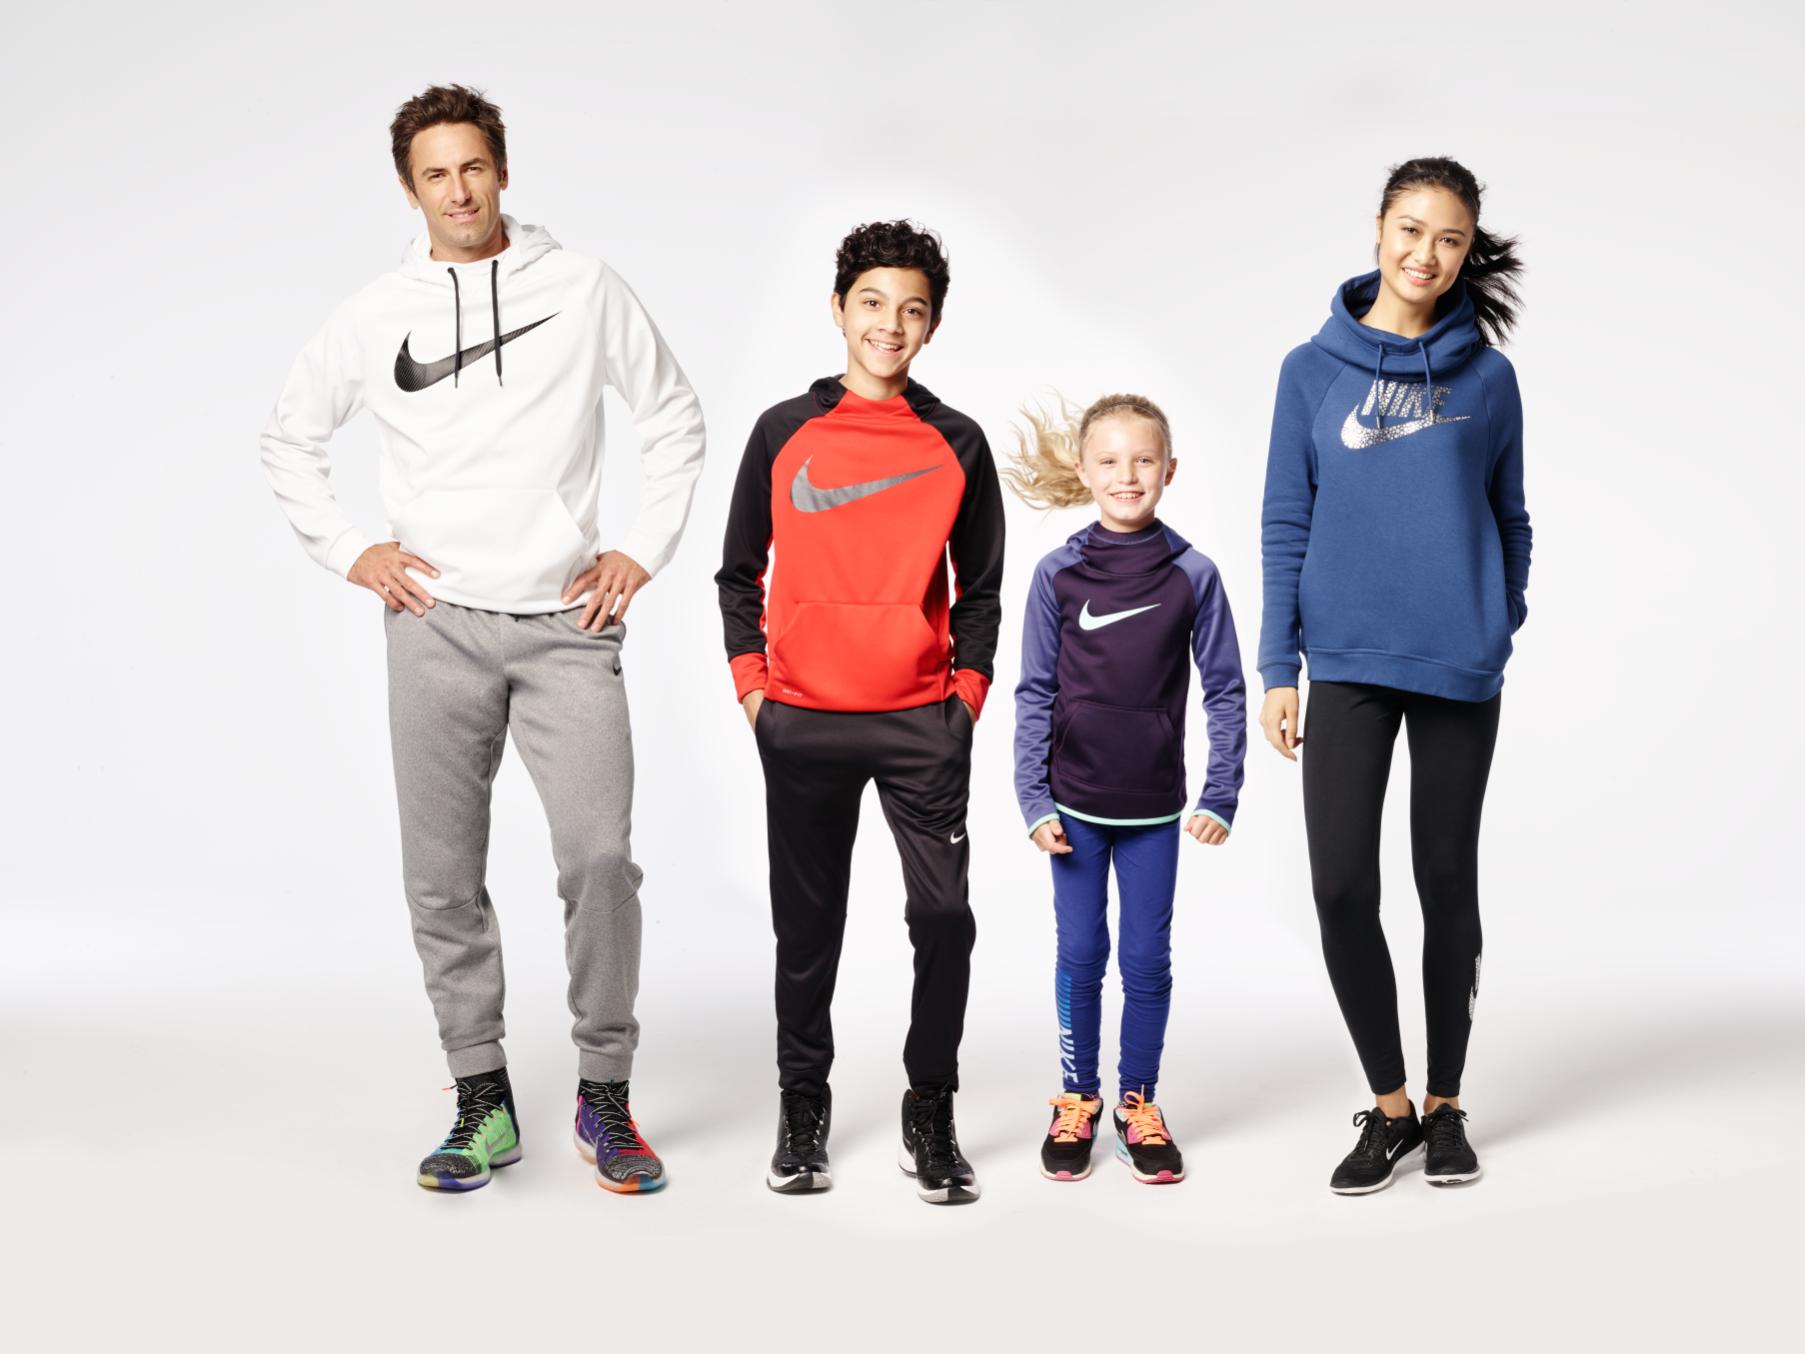 Www wear. Фэмили найк. Nike Wear. Семья в спортивной одежде. Модная одежда для всей семьи.